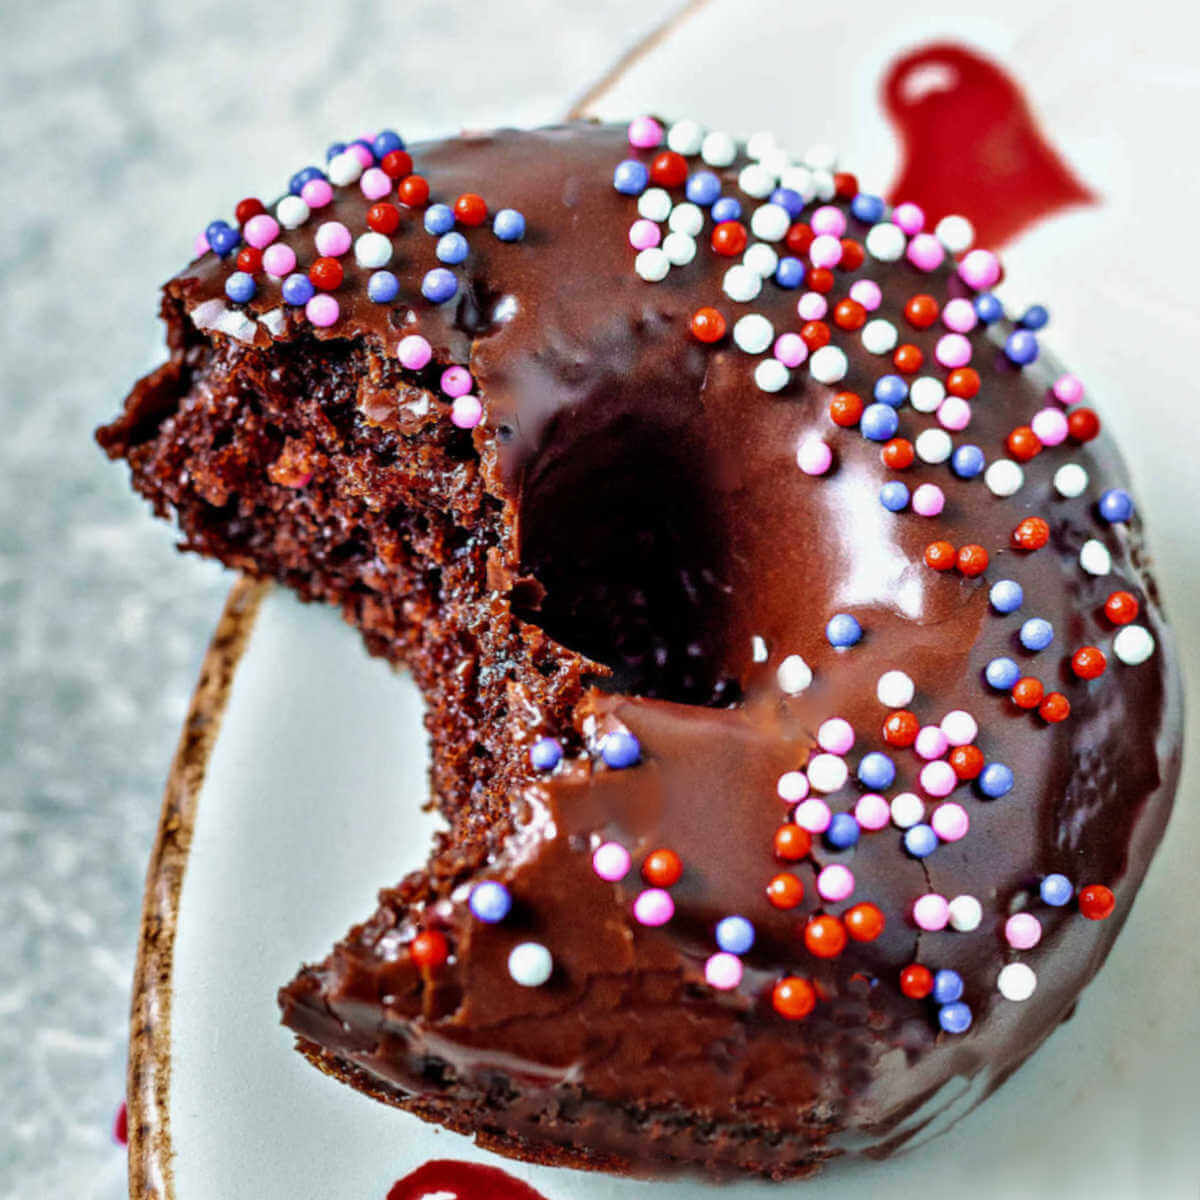 Glazed Chocolate Donut Recipe (Easy Baked Donuts)